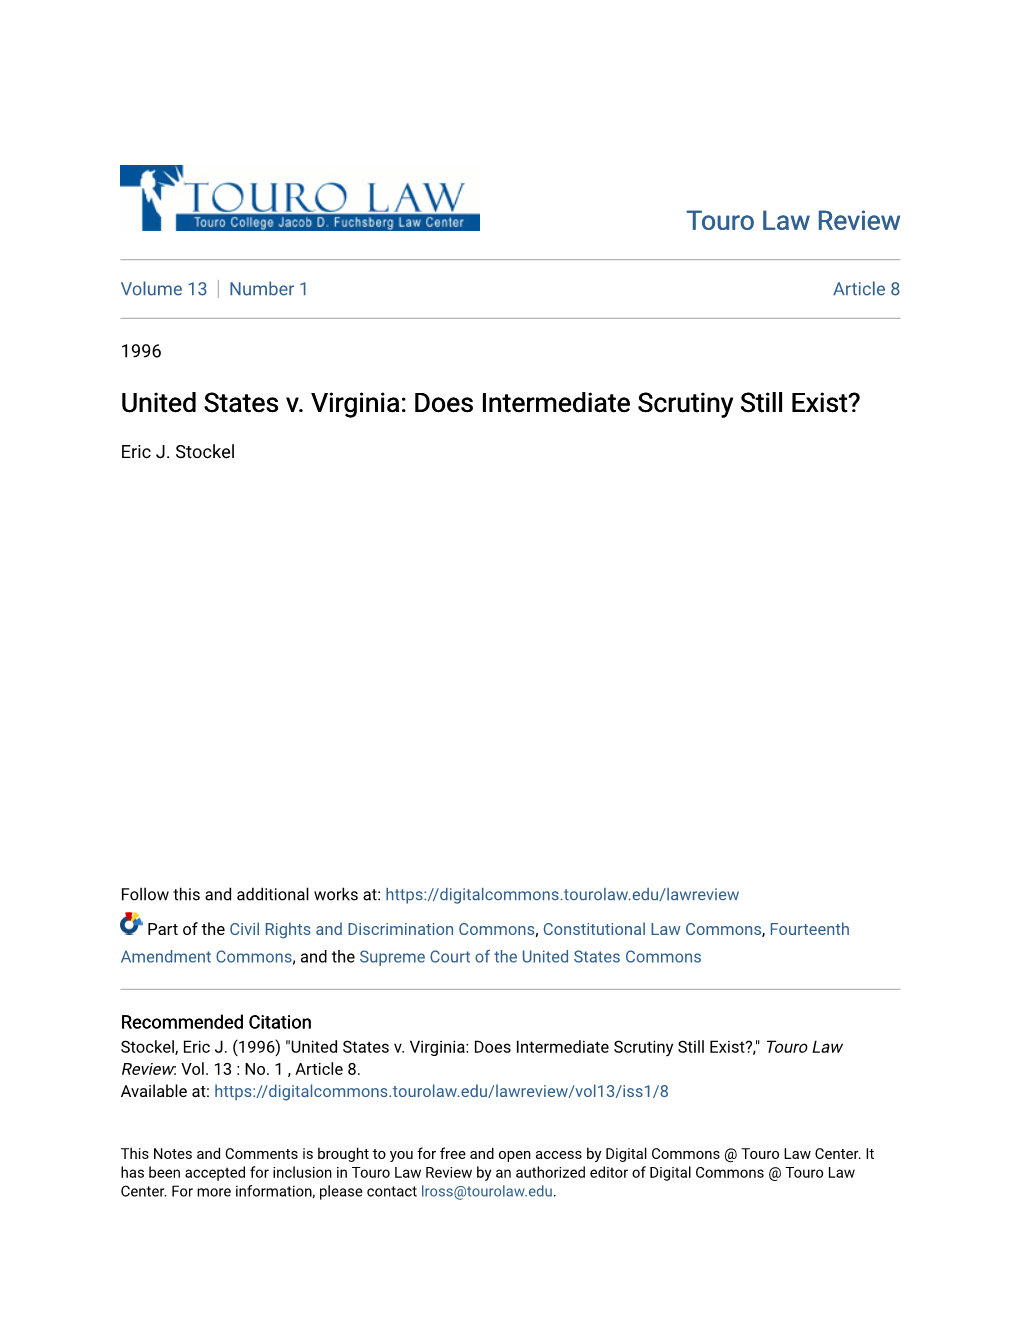 United States V. Virginia: Does Intermediate Scrutiny Still Exist?